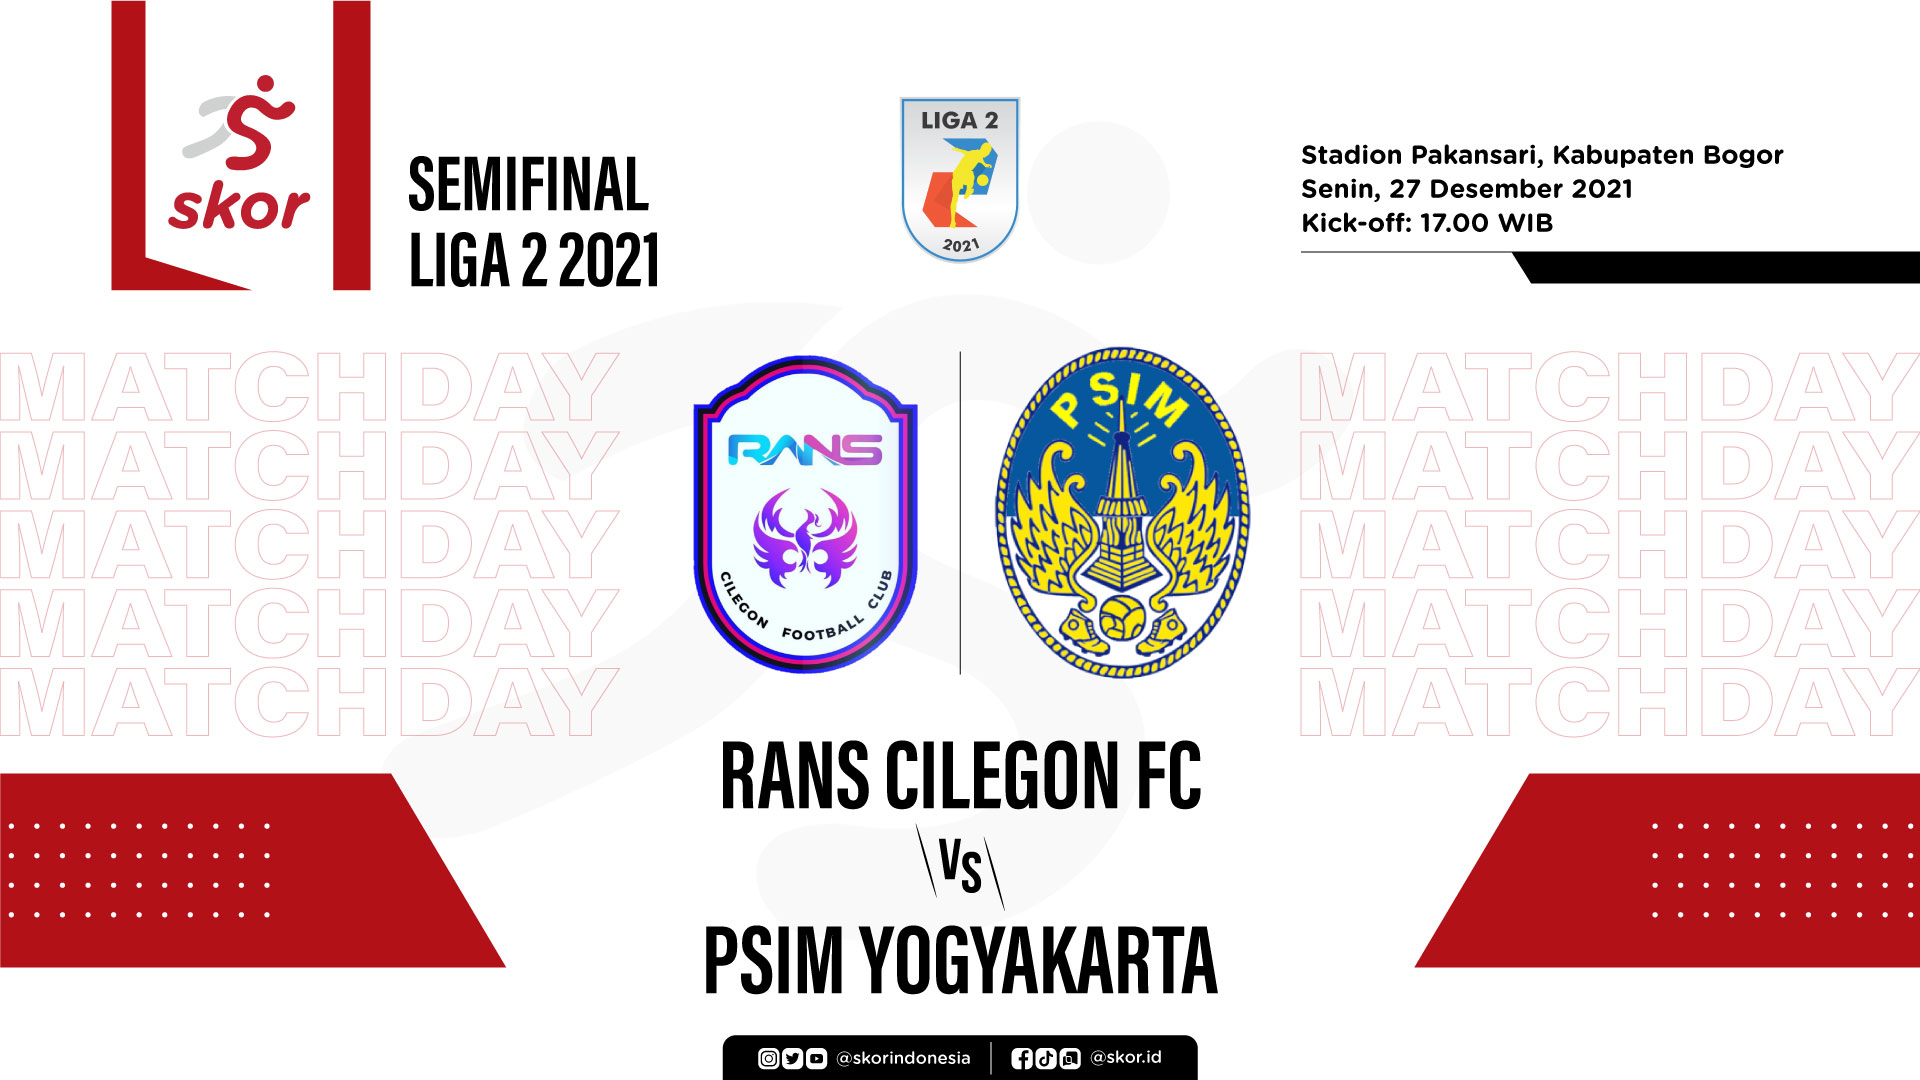 Rans Cilegon FC vs PSIM Yogyakarta: Prediksi dan Link Live Streaming